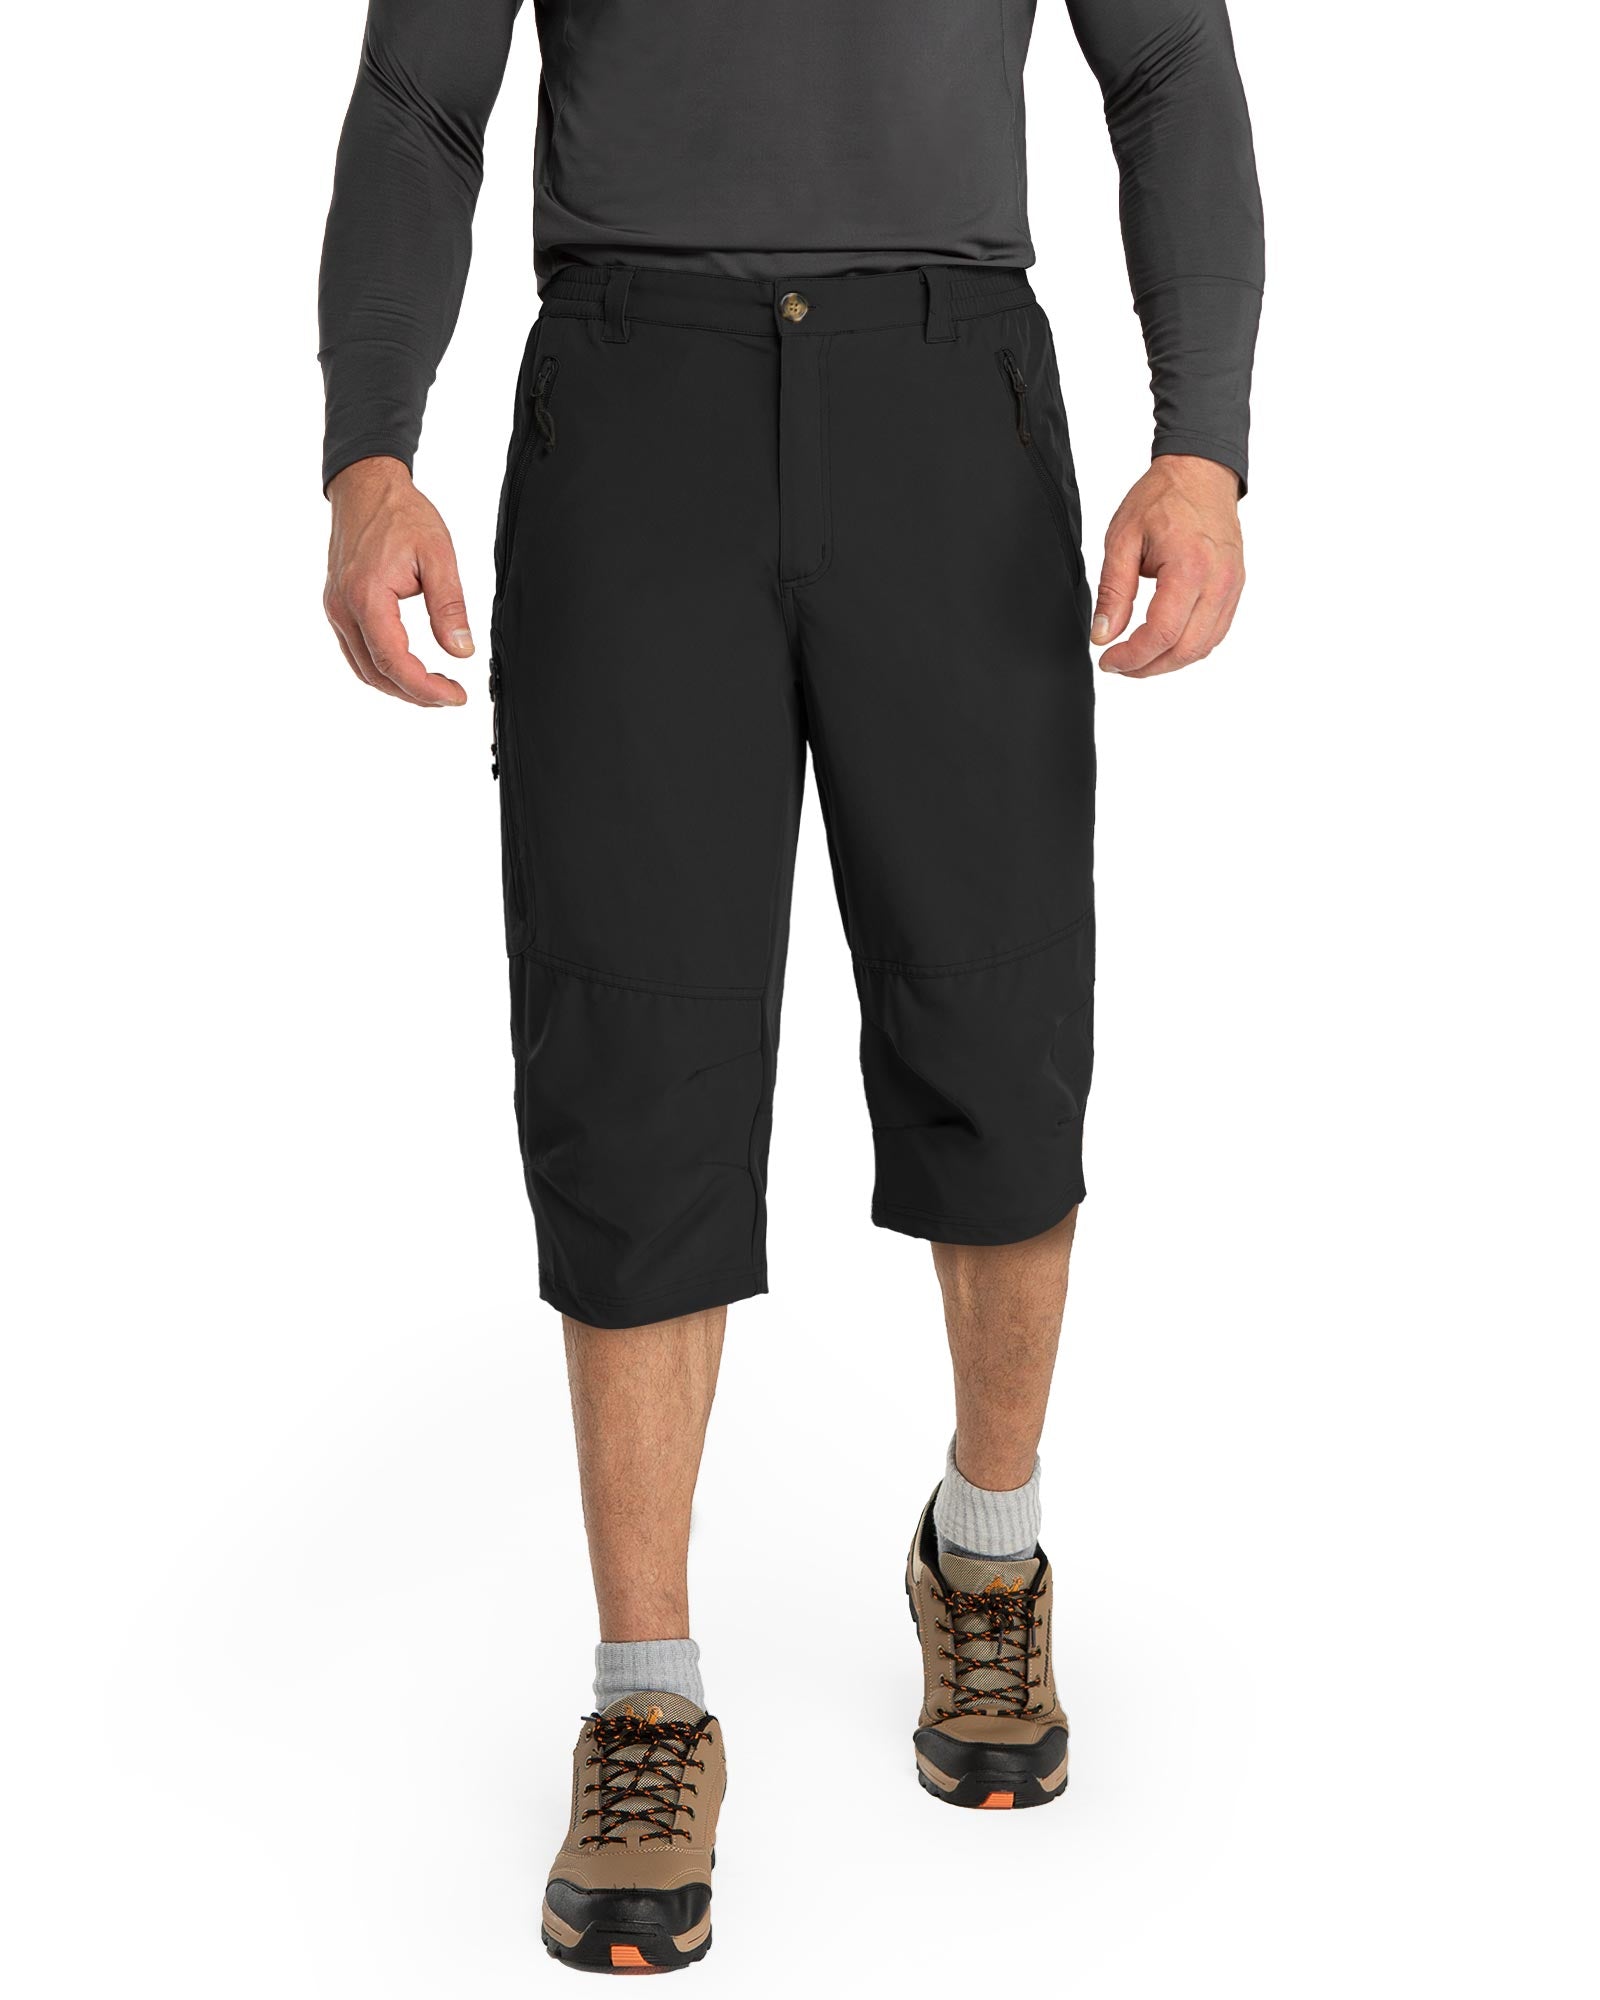 Buy Men Capri Pants & Men's Plus Size Capris - Apella